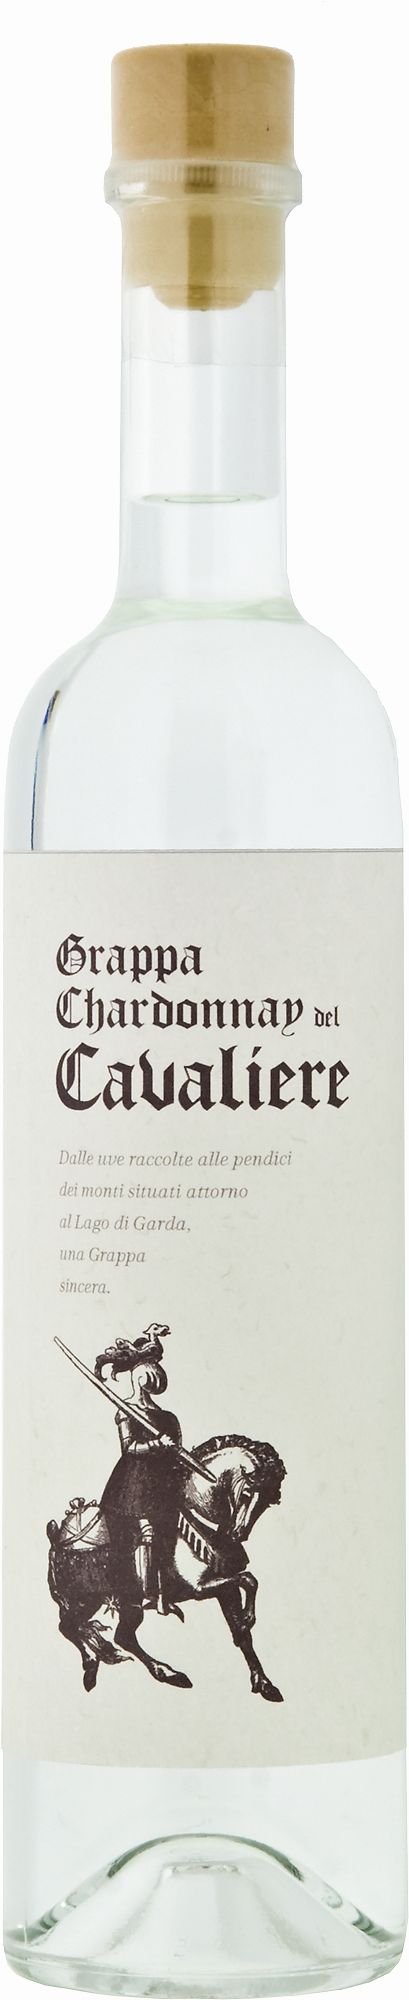 Marzadro Cavaliere Grappa Chardonnay 0,5Ltr